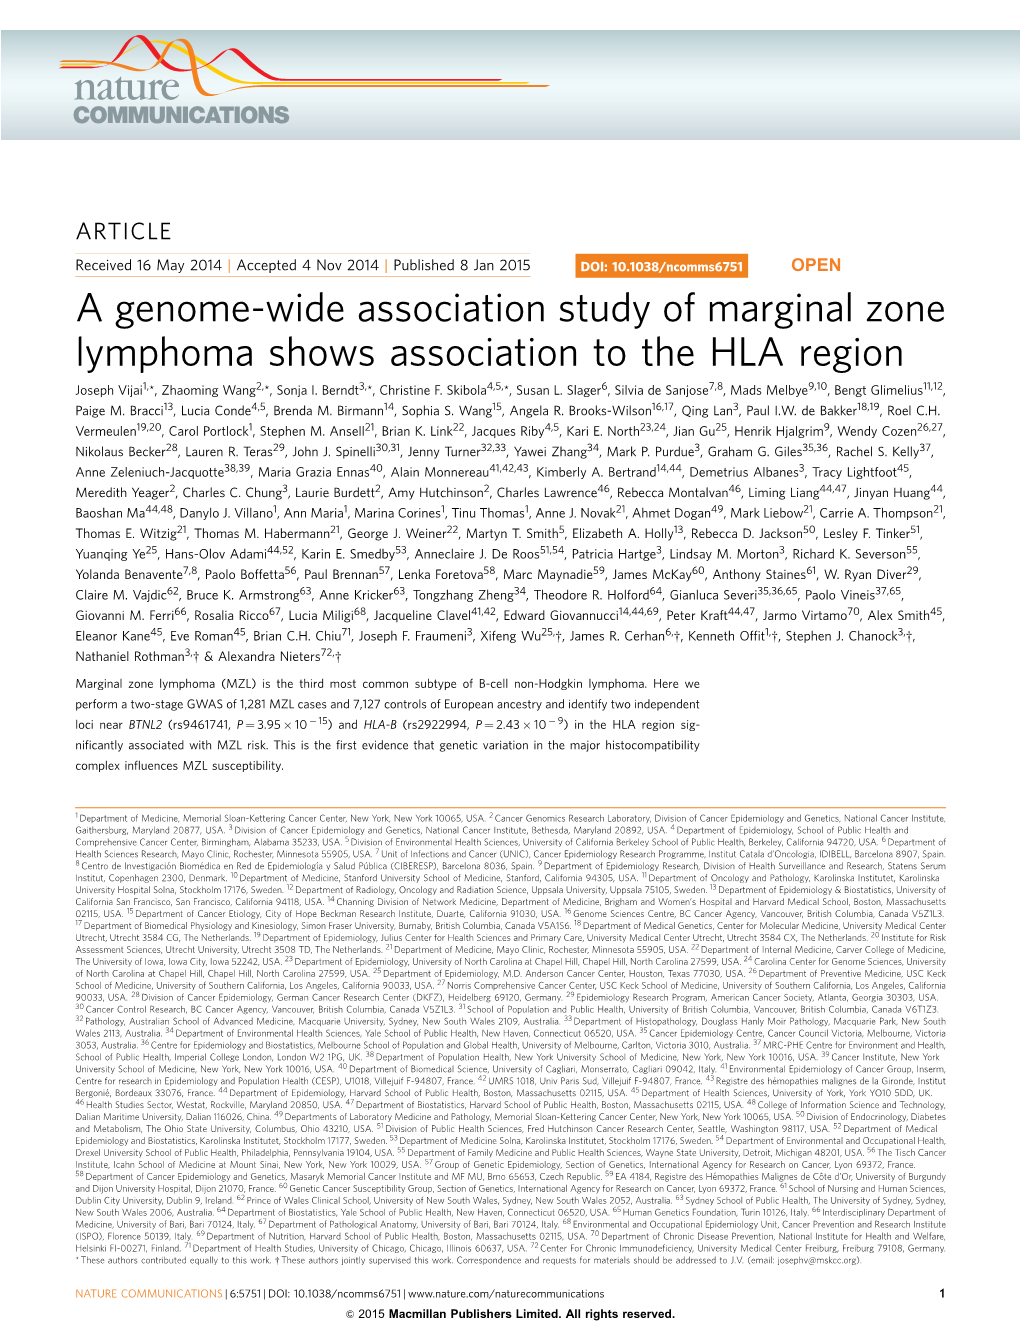 A Genome-Wide Association Study of Marginal Zone Lymphoma Shows Association to the HLA Region Joseph Vijai1,*, Zhaoming Wang2,*, Sonja I